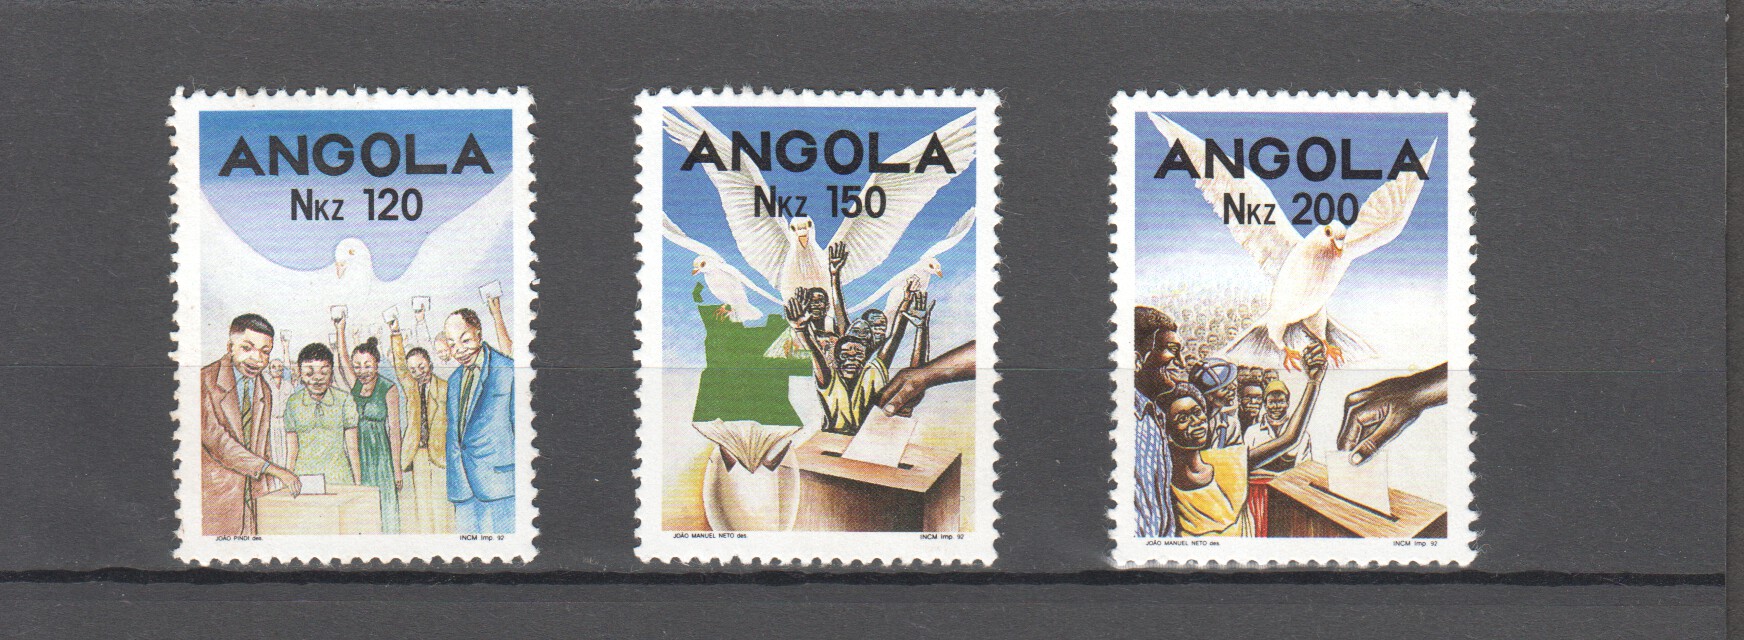 Angola Scott 851-3 MNH (Set) - Click Image to Close